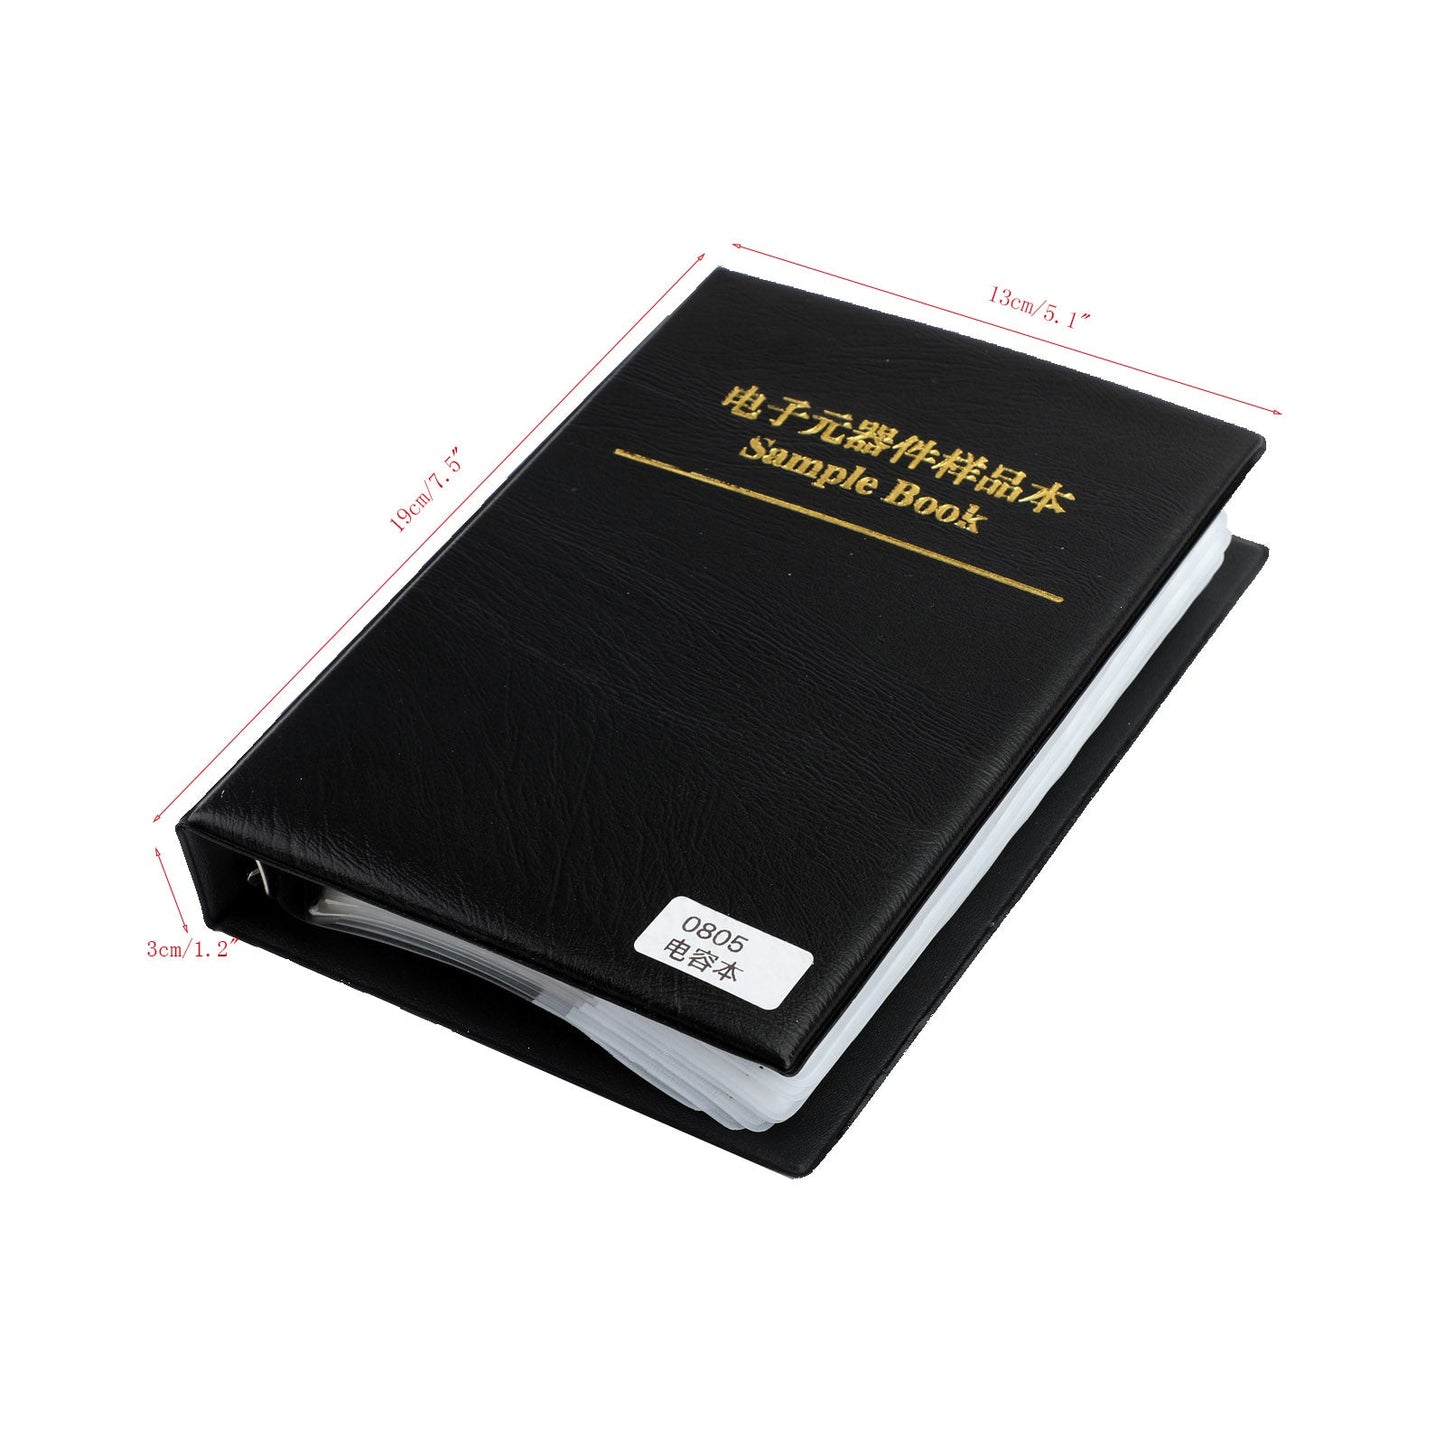 SMD0805 Capacitor sample book 92 values * 50pcs=4600pcs Capacitor kit SMD